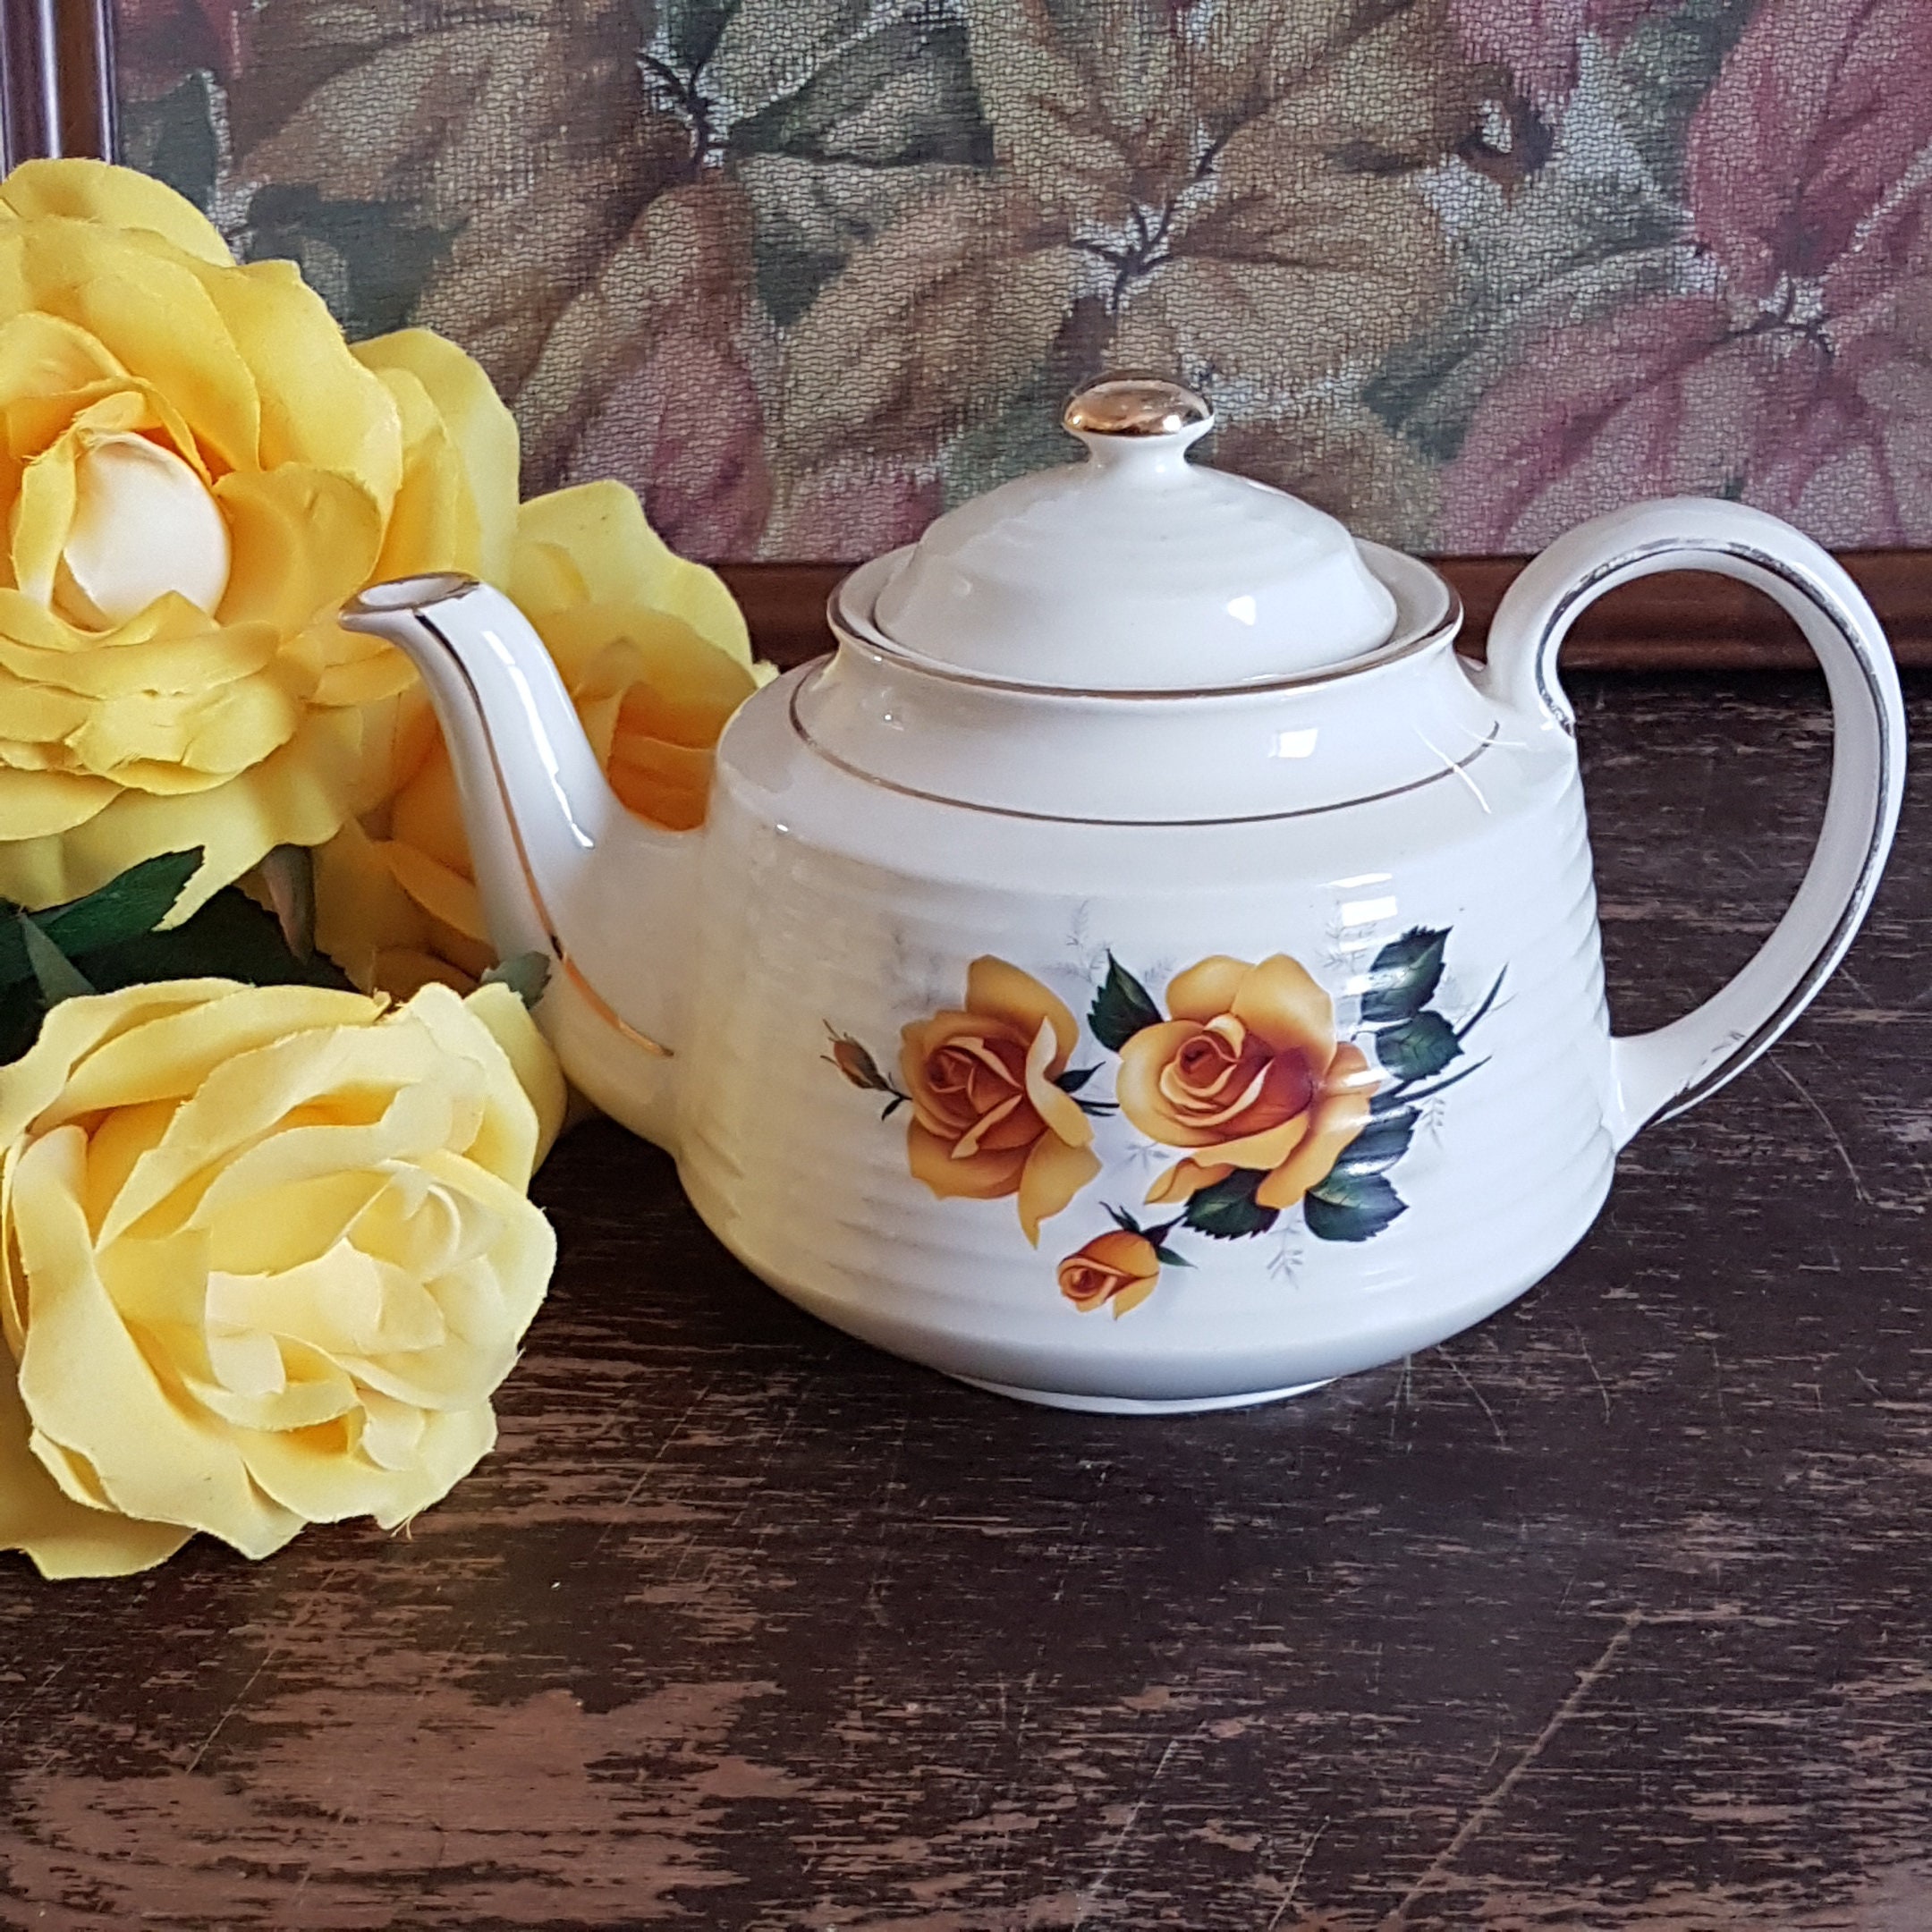 Vintage Sadler Porcelain Collectible Yellow Rose Teapot Giftable